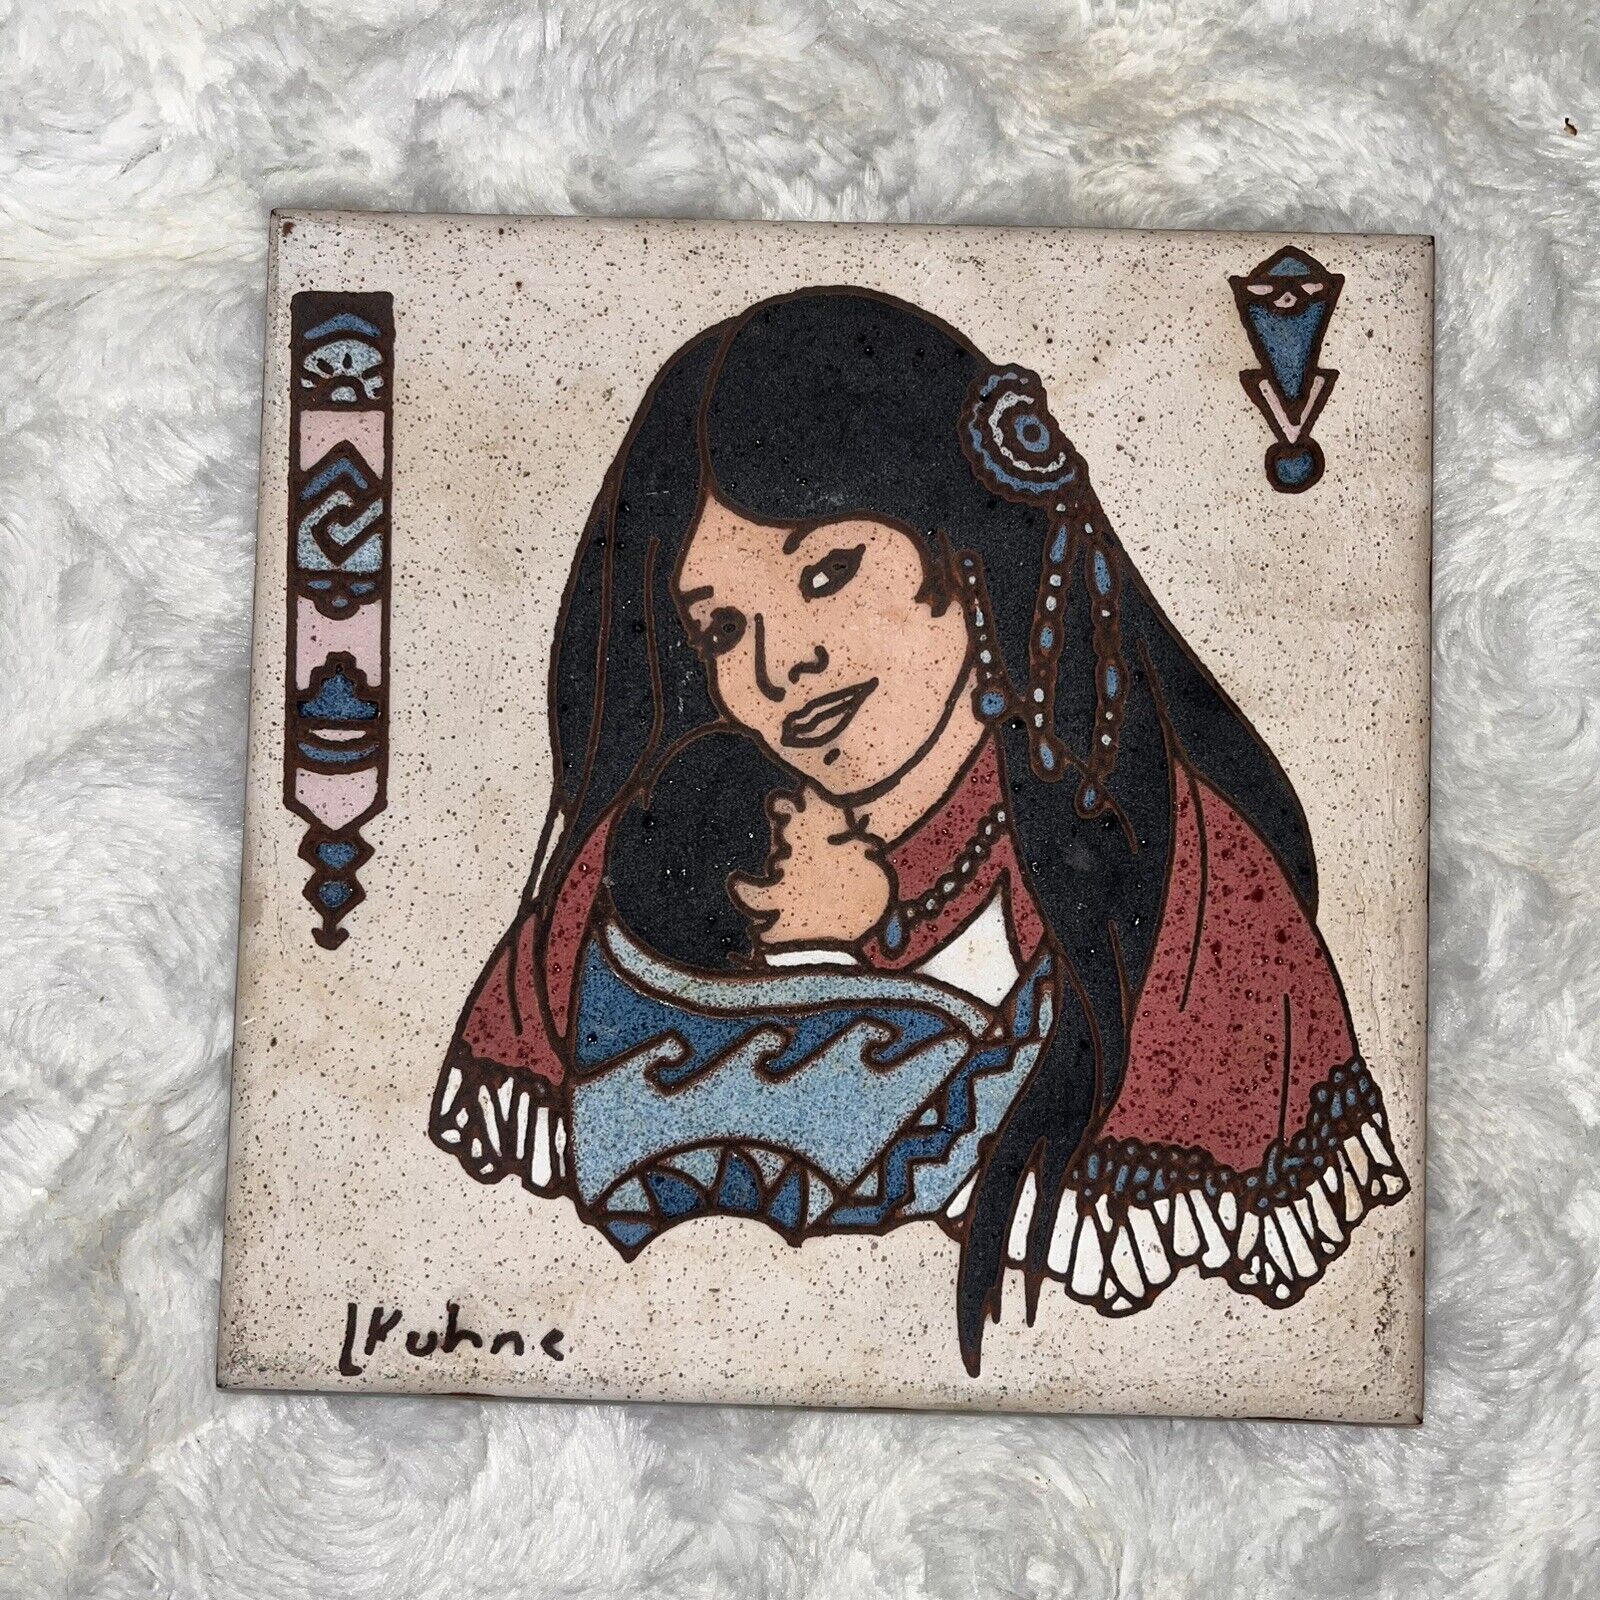 Earthtones Tile 1984 Navajo Mother & Child, Kuhne 6” x 6” USA Southwest Art NICE